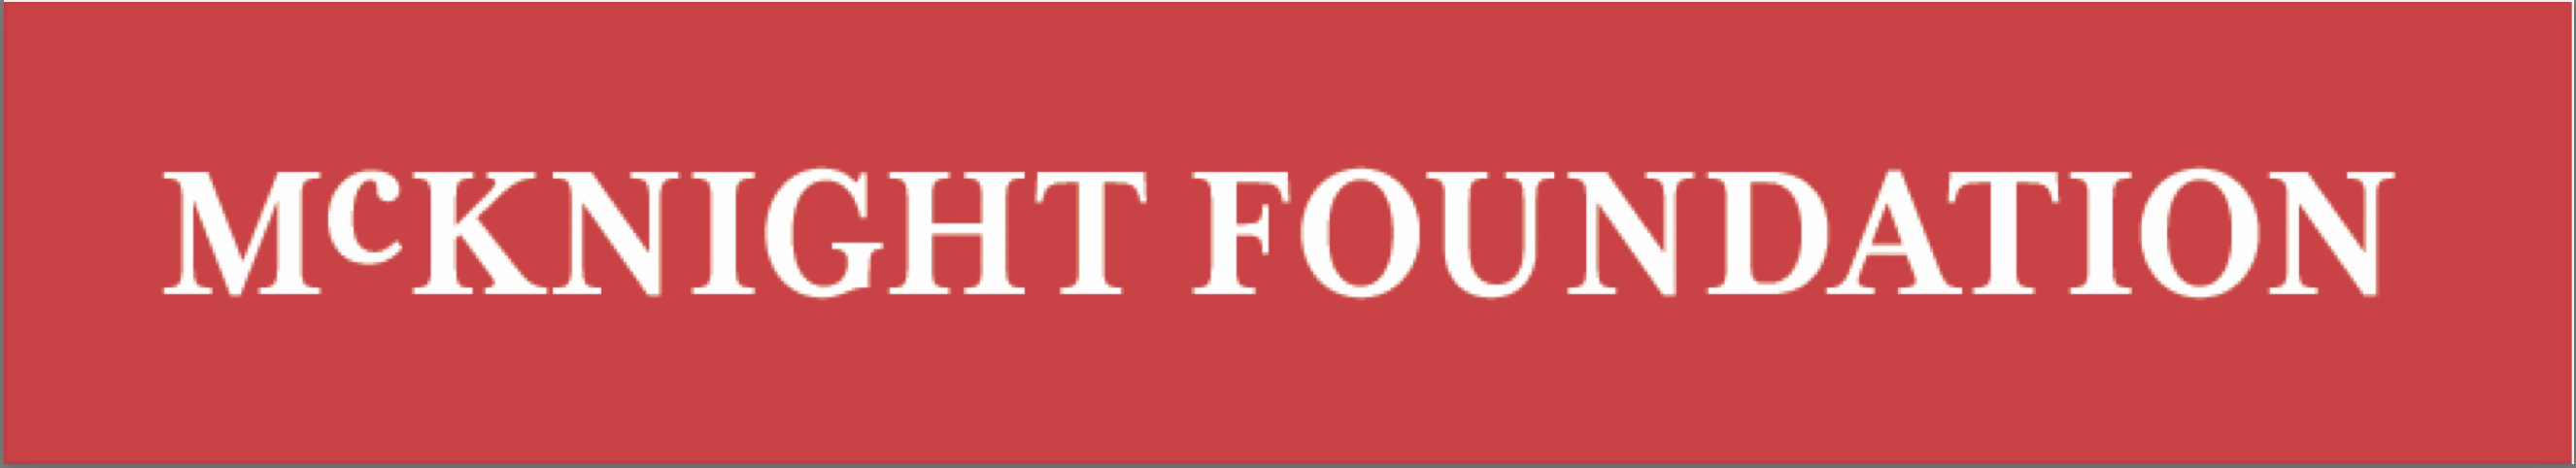 McKnight Foundation Logo